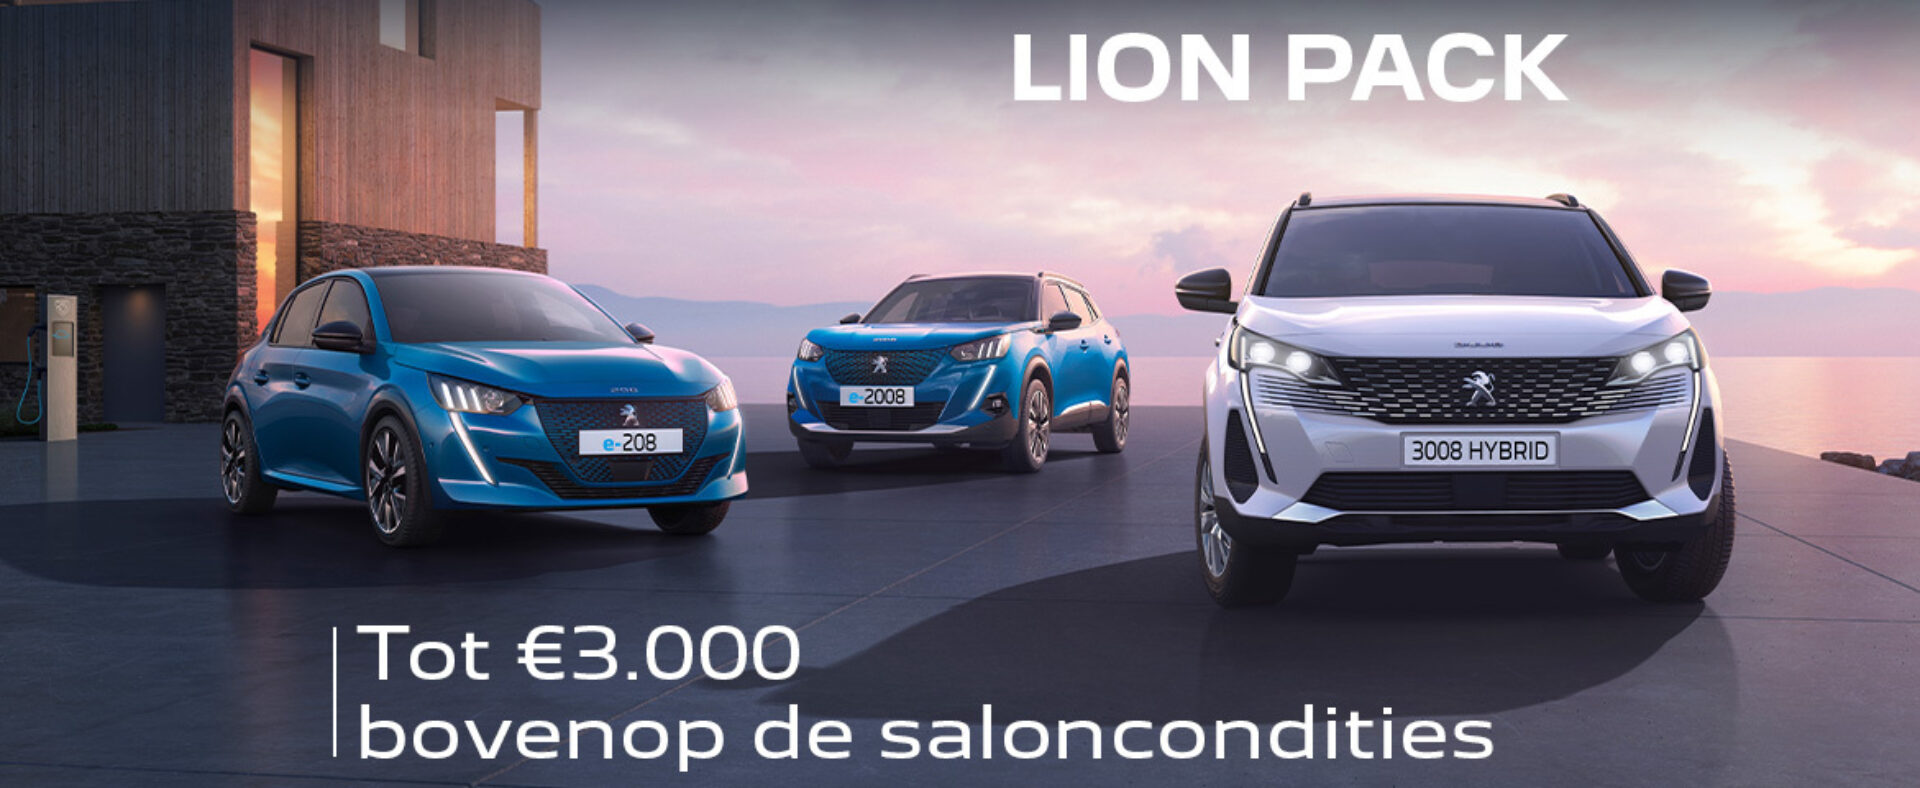 202201 Peugoet Salon Lion Pack